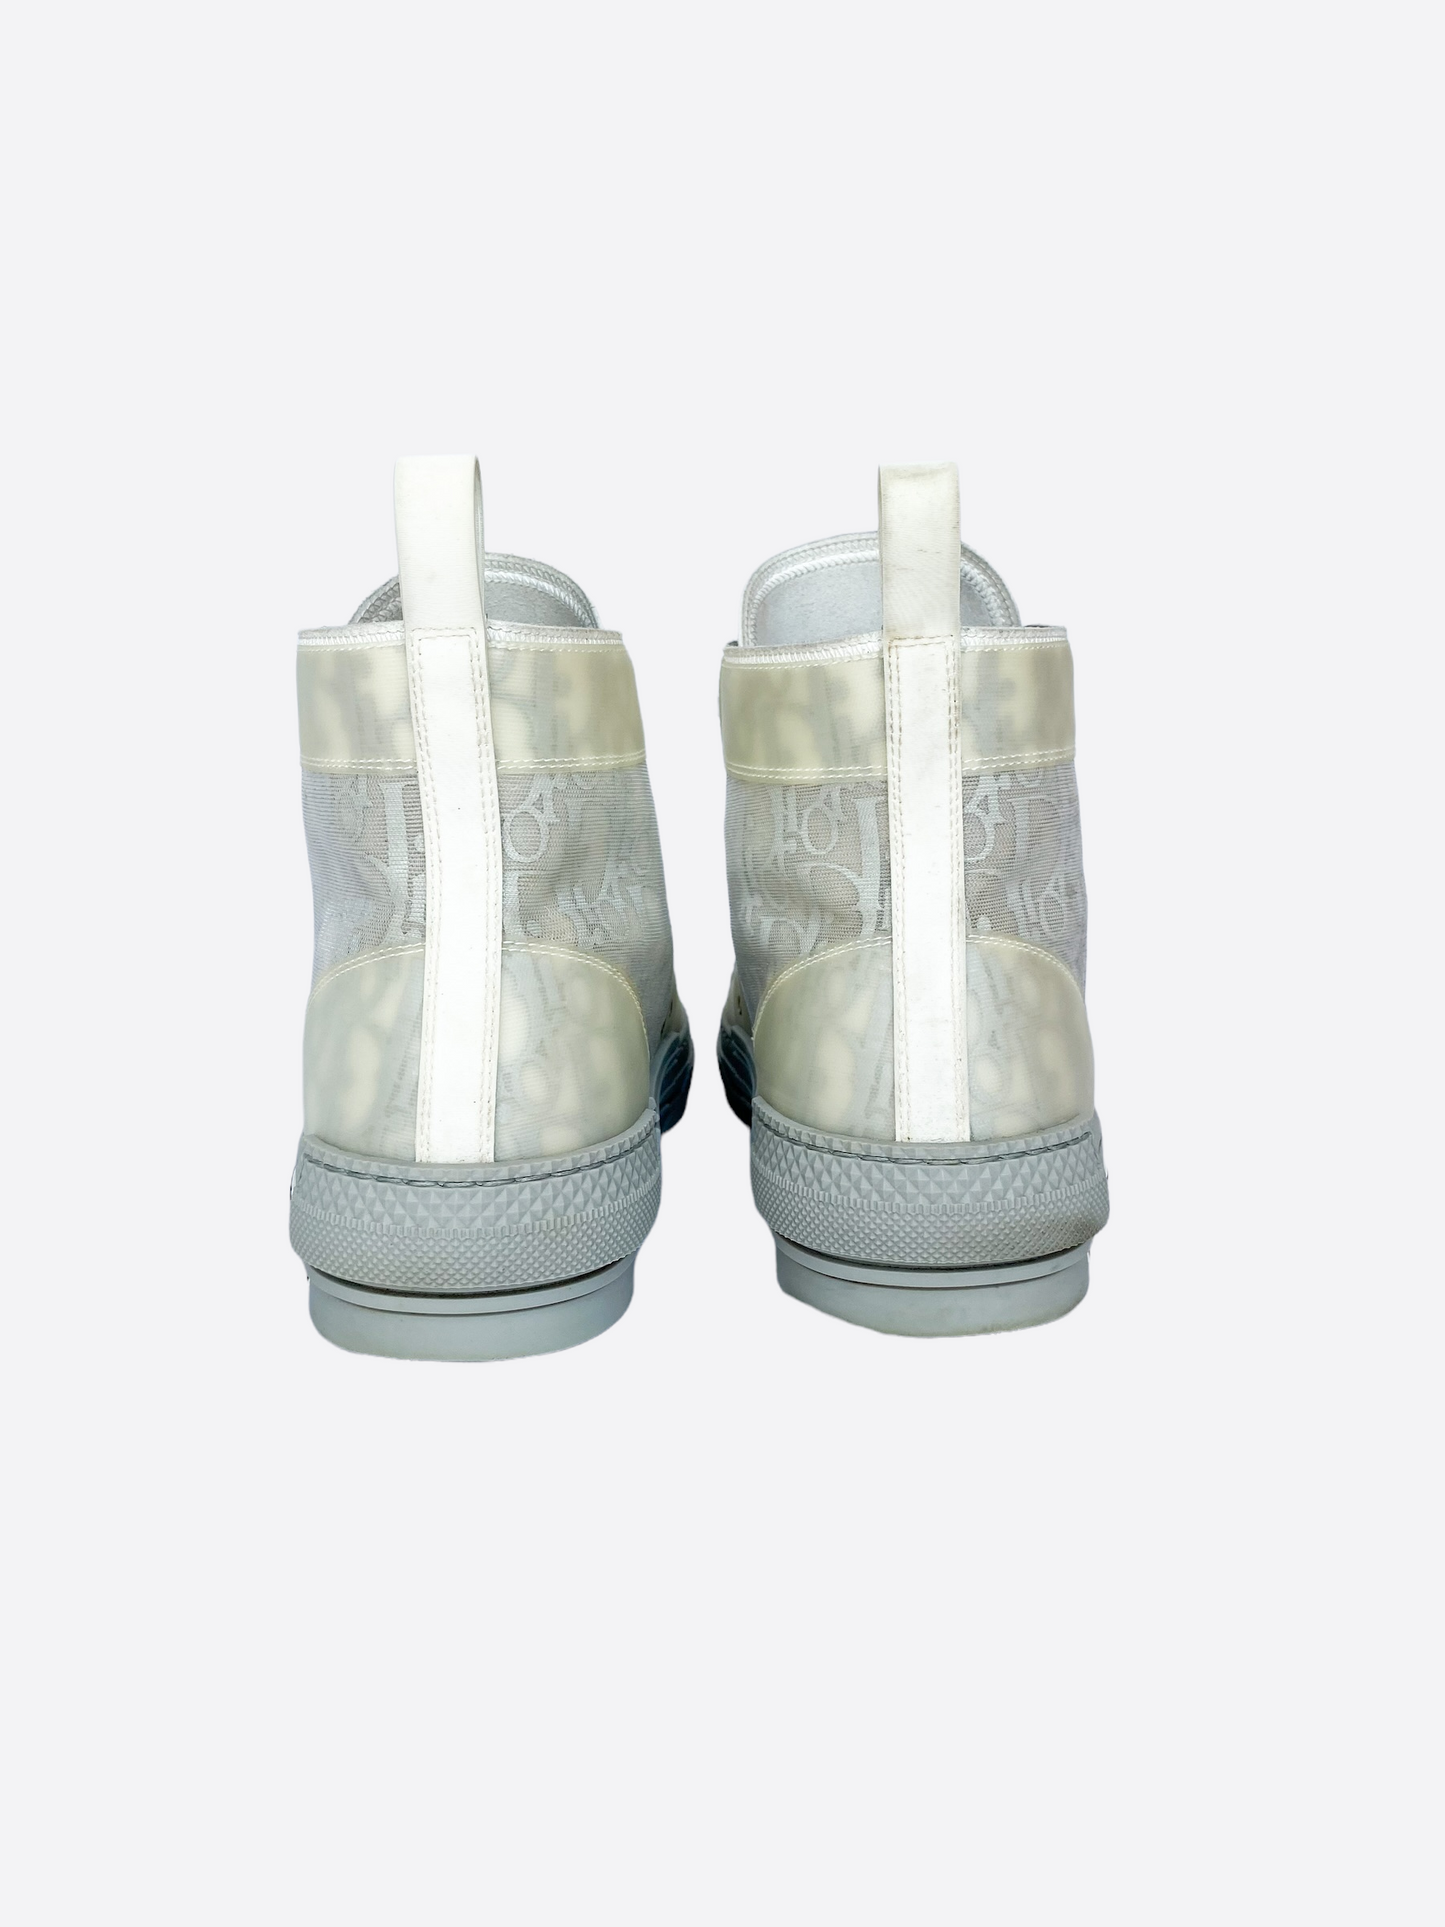 Dior Oblique Grey B23 High Top Sneaker